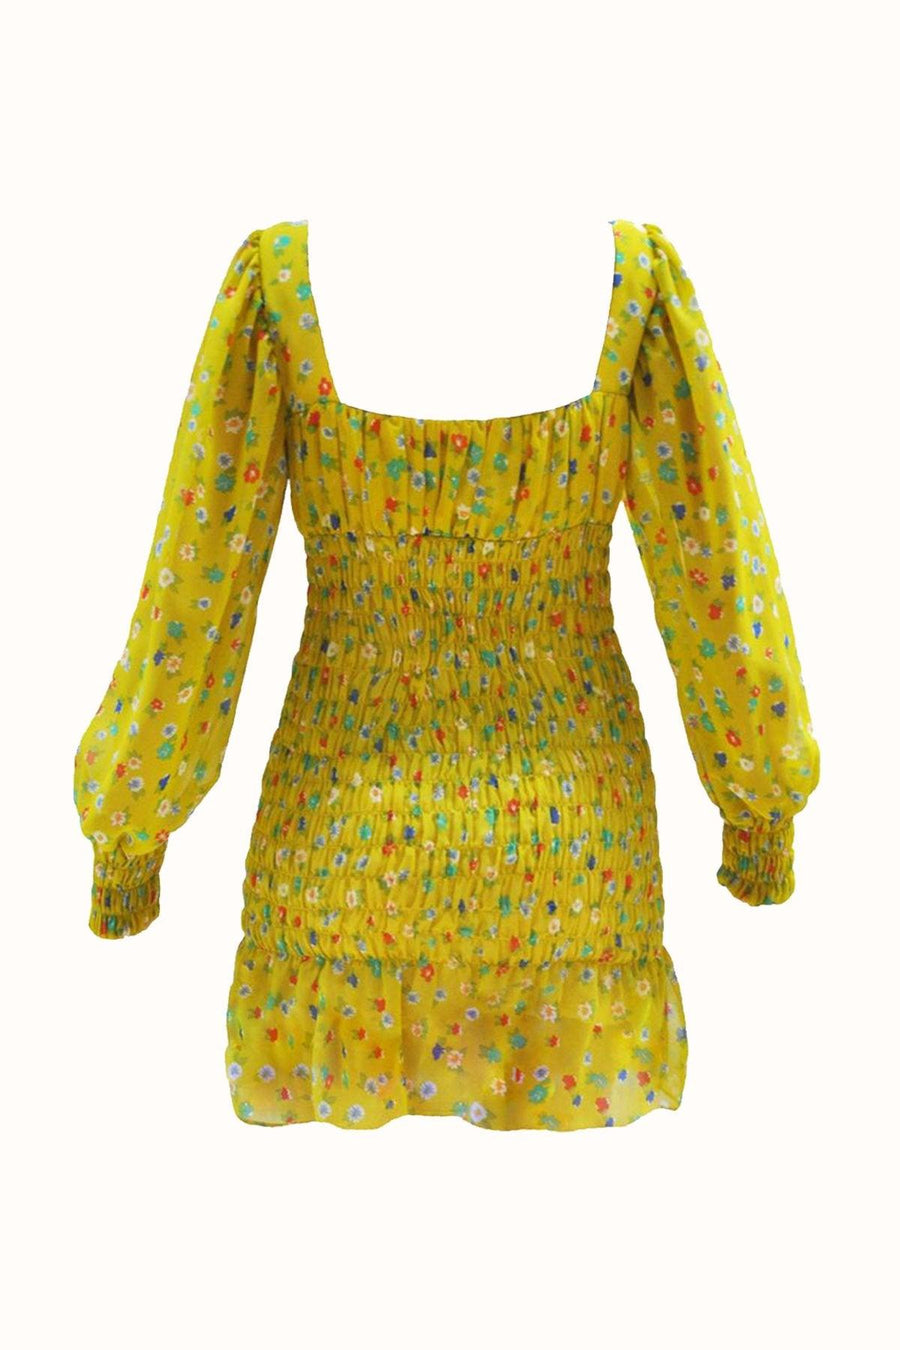 Zella Elbise / Sarı Çiçekli - NAIA ISTANBUL Shop Online